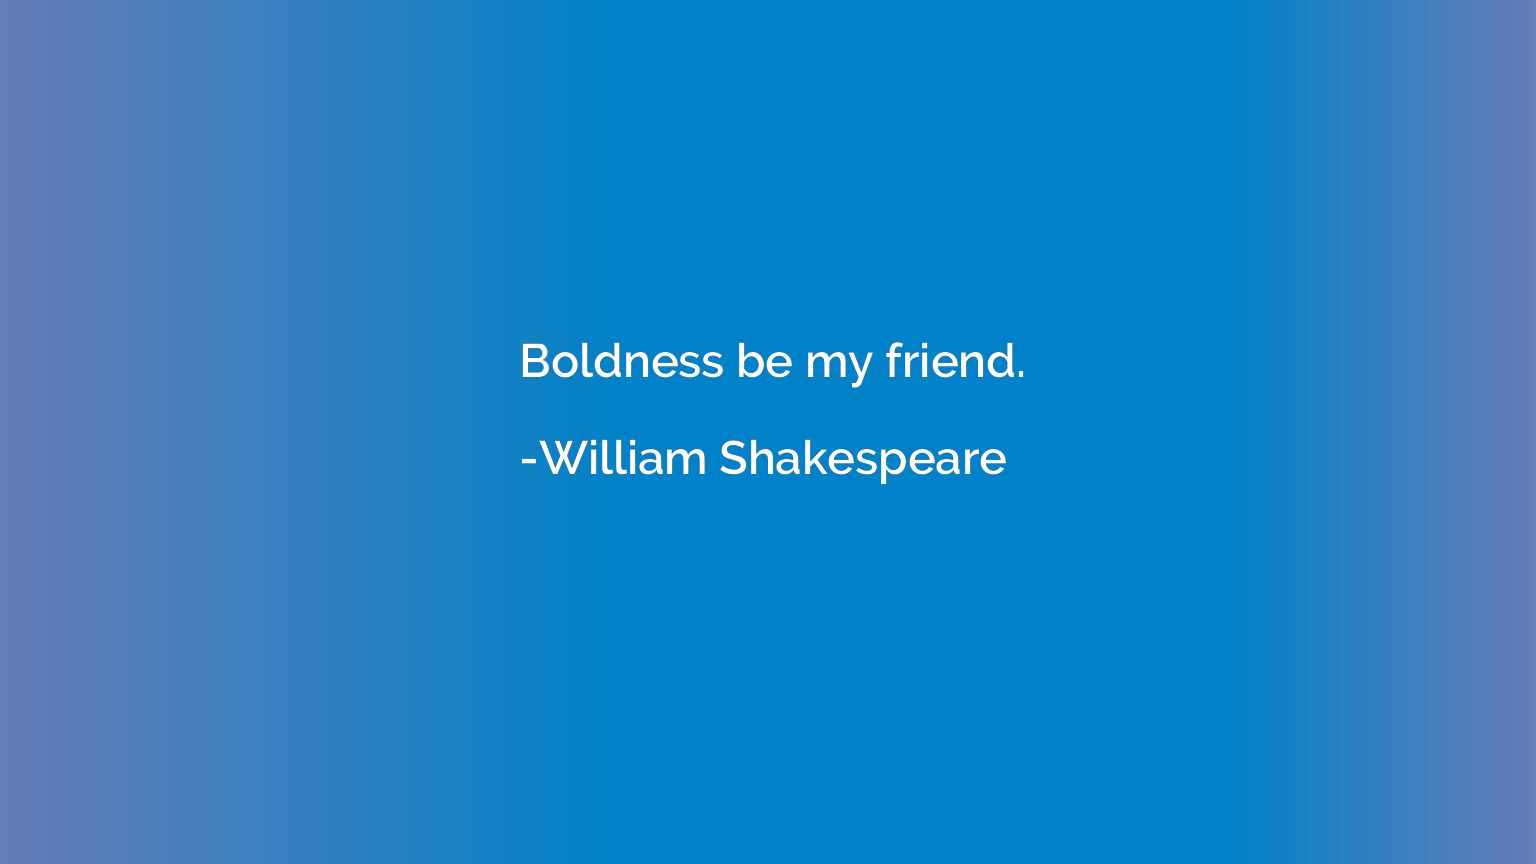 Boldness be my friend.